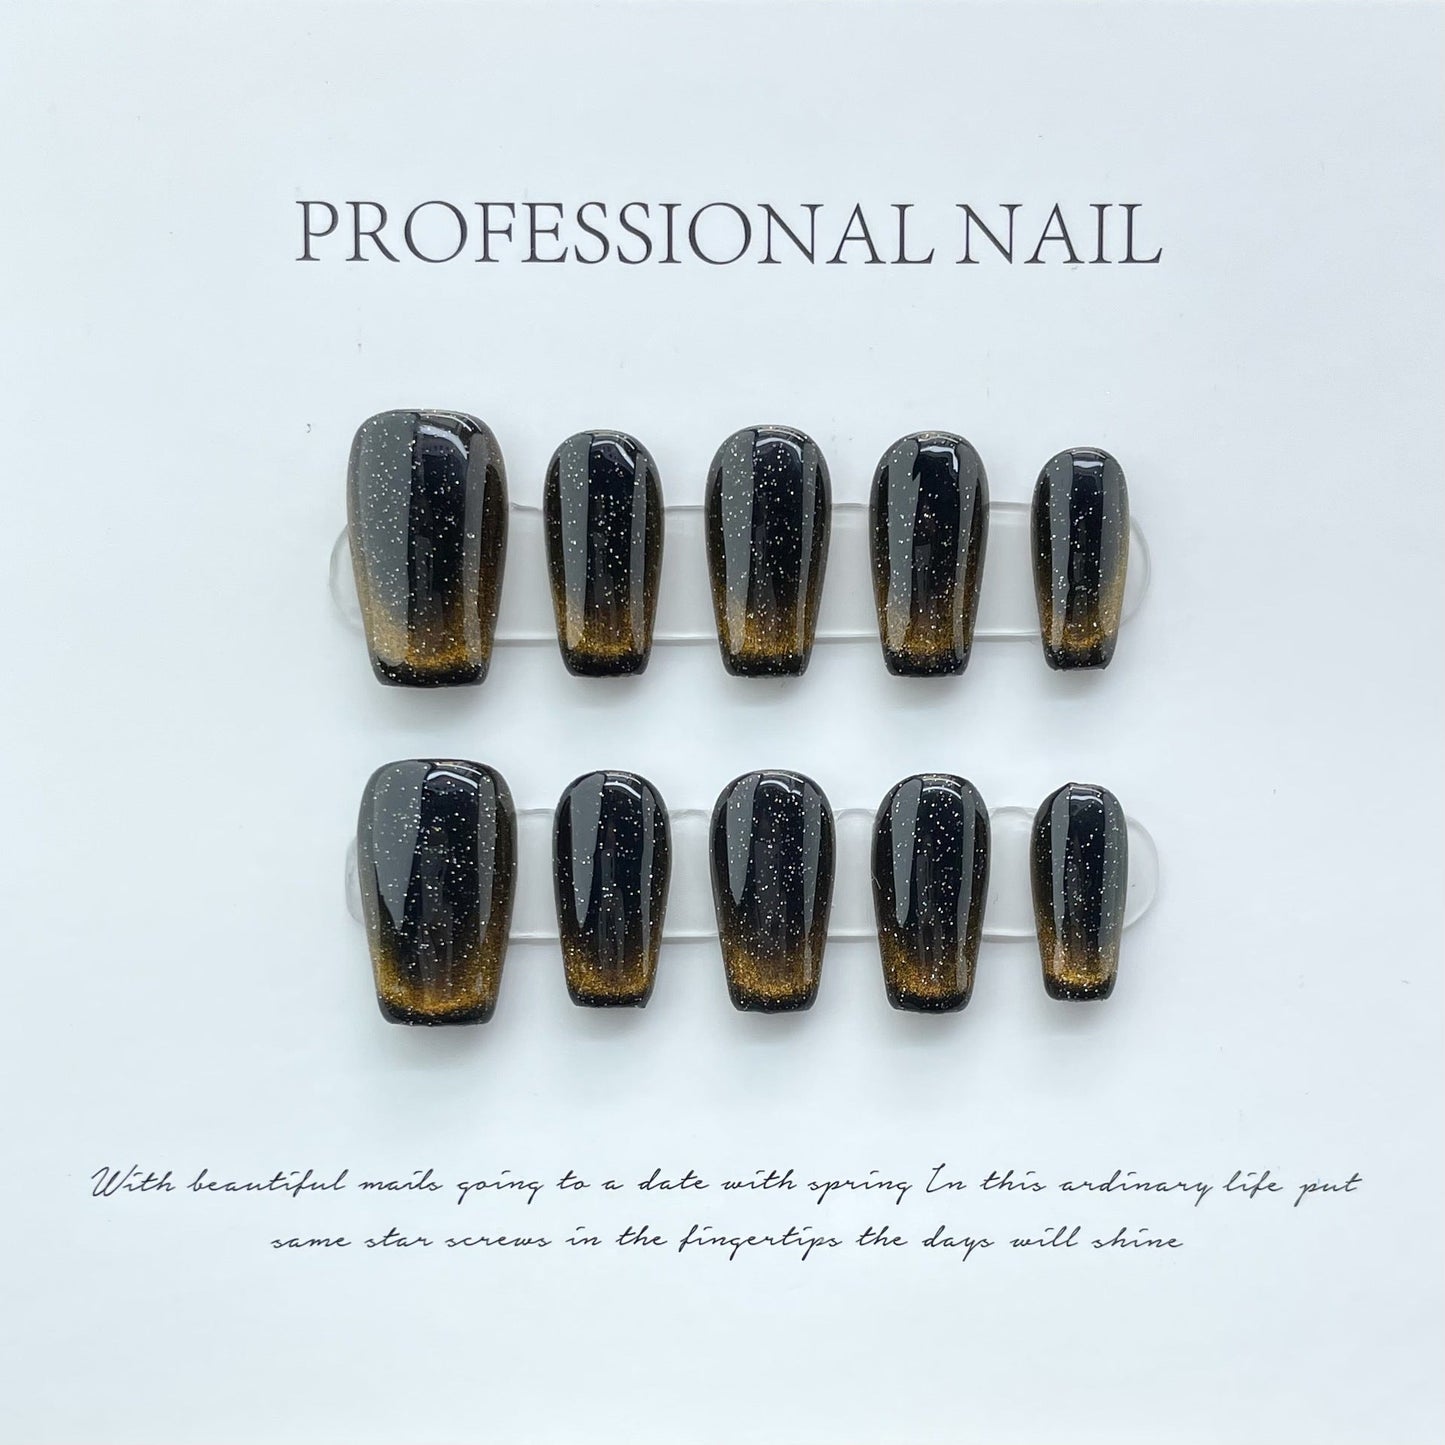 708 Cateye Effect style press on nails 100% handmade false nails white golden